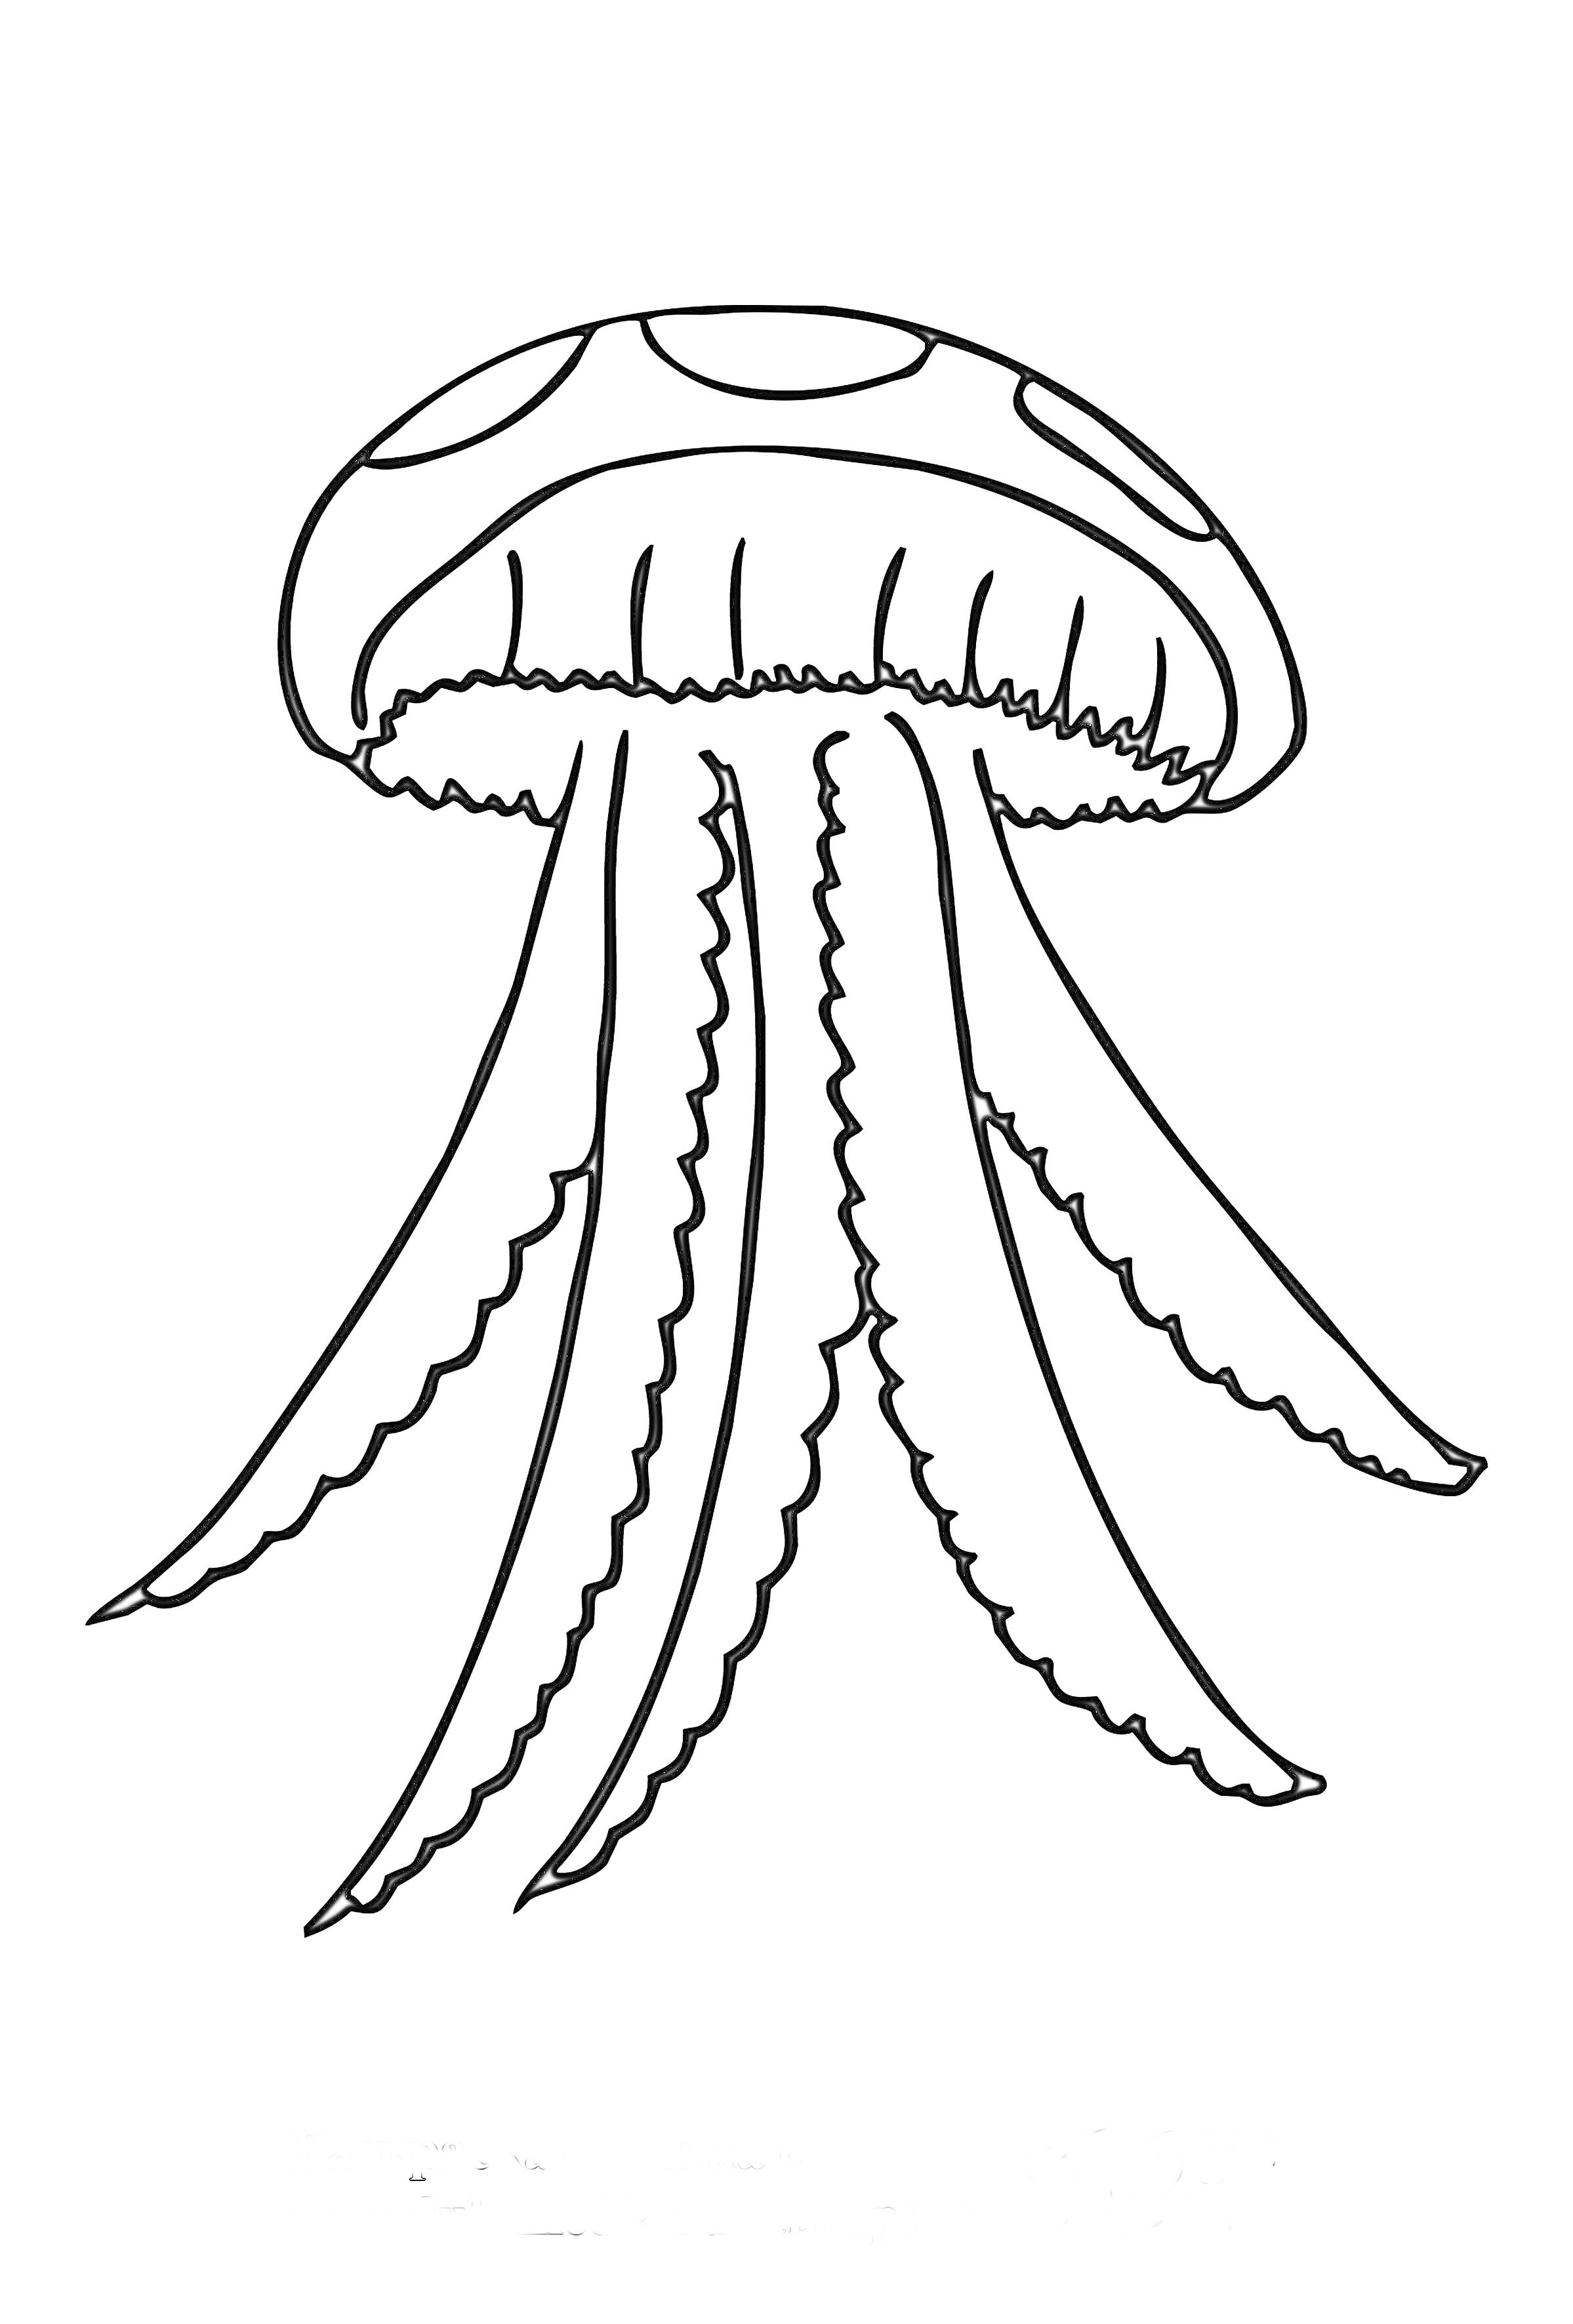 Раскраска Медуза с шестью щупальцами и узорами на теле